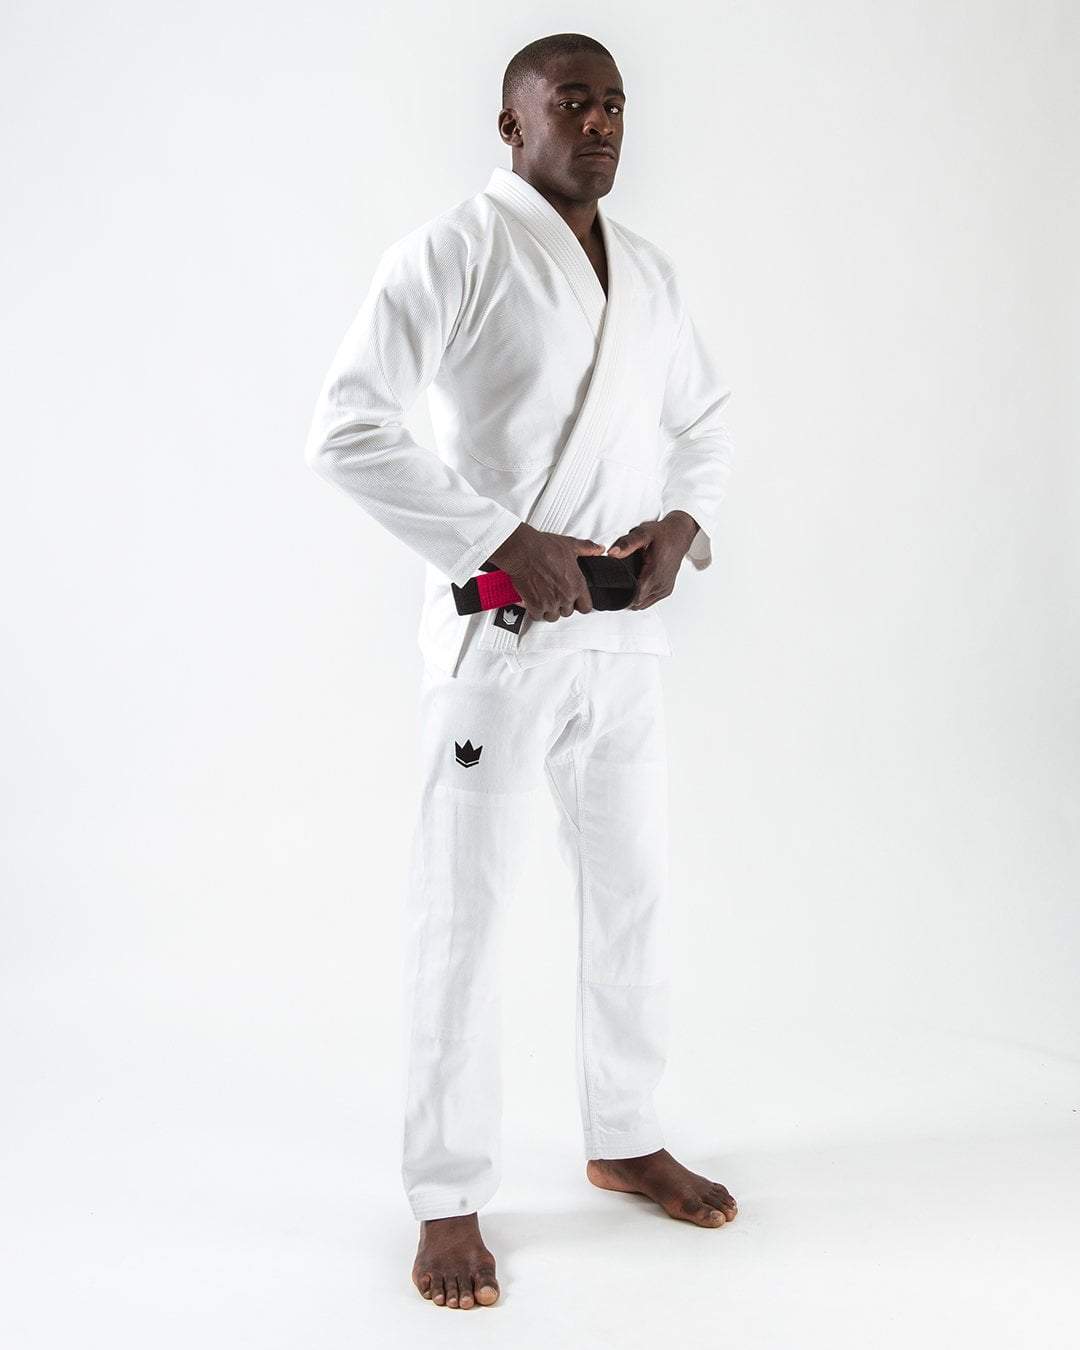 Kingz Kore Brazilian Jiu Jitsu Gi - Men's Lightweight Durable BJJ Kimono -  IBJJF Legal - 375gsm Pearl Weave Pro Training